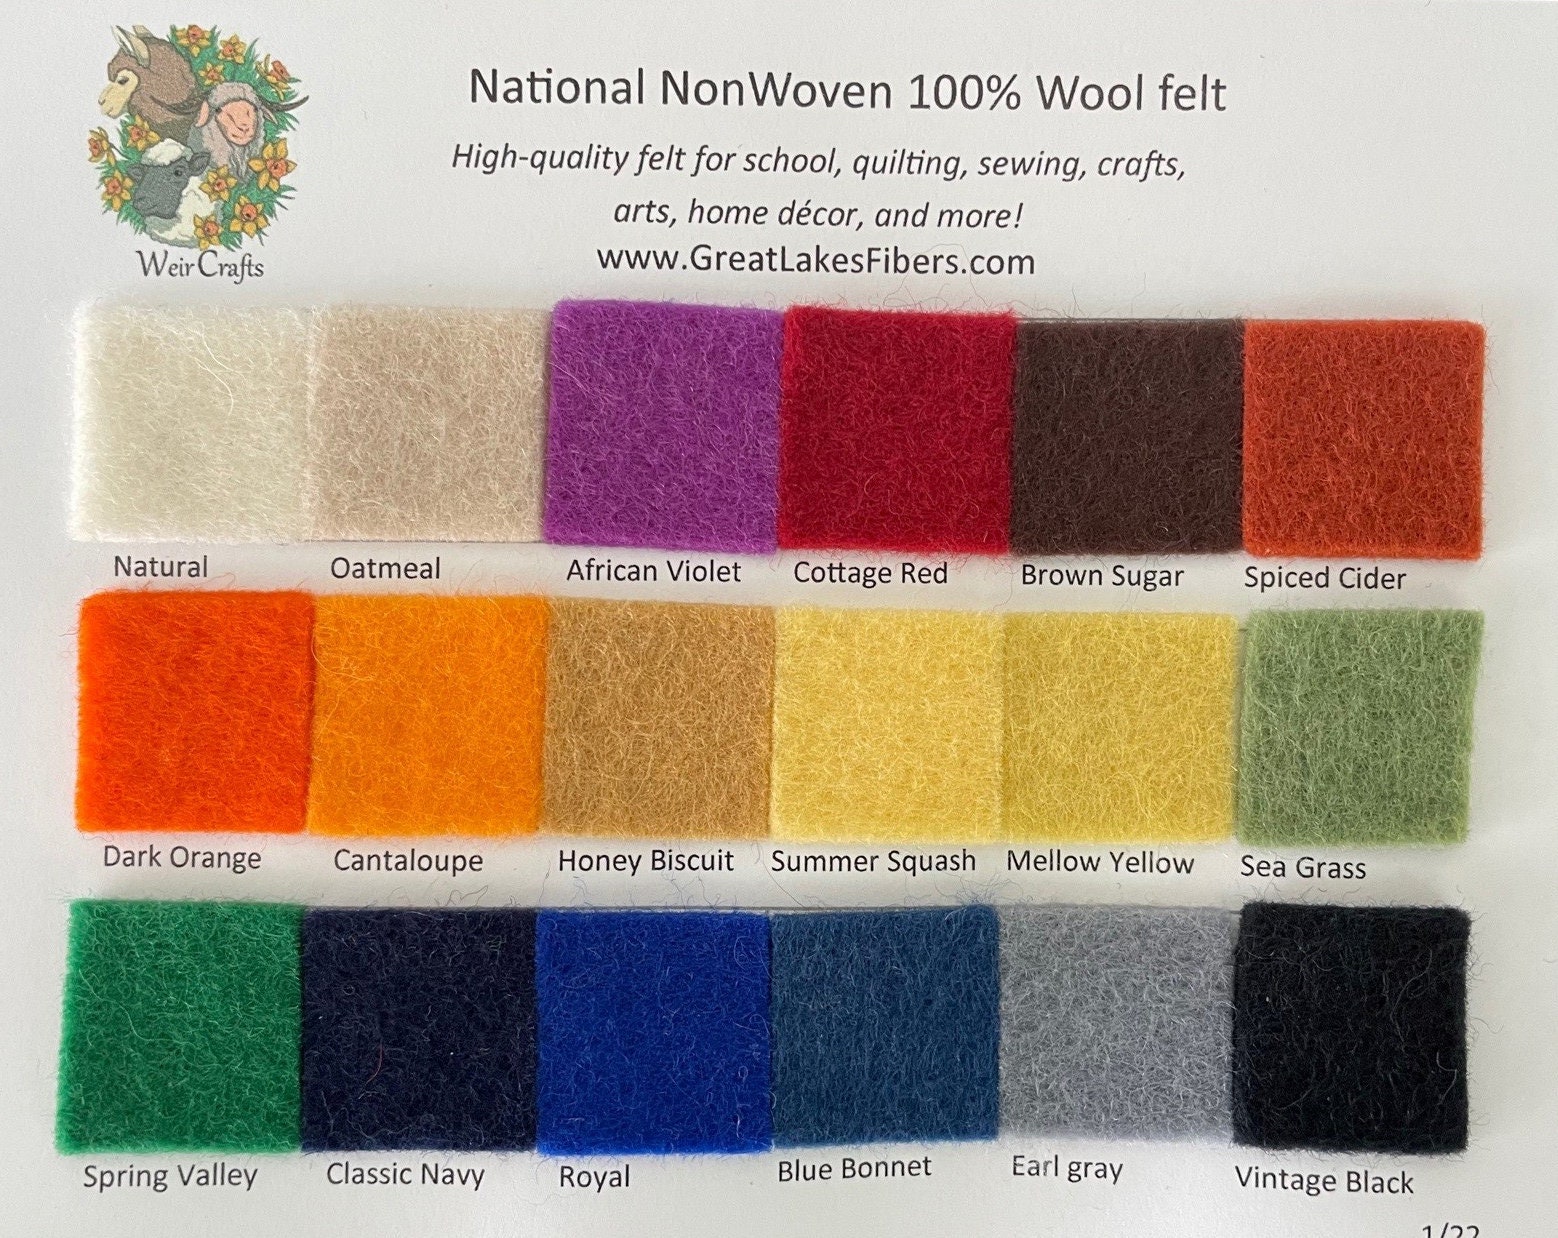 National Nonwovens 100% Wool Felt - (1/10)